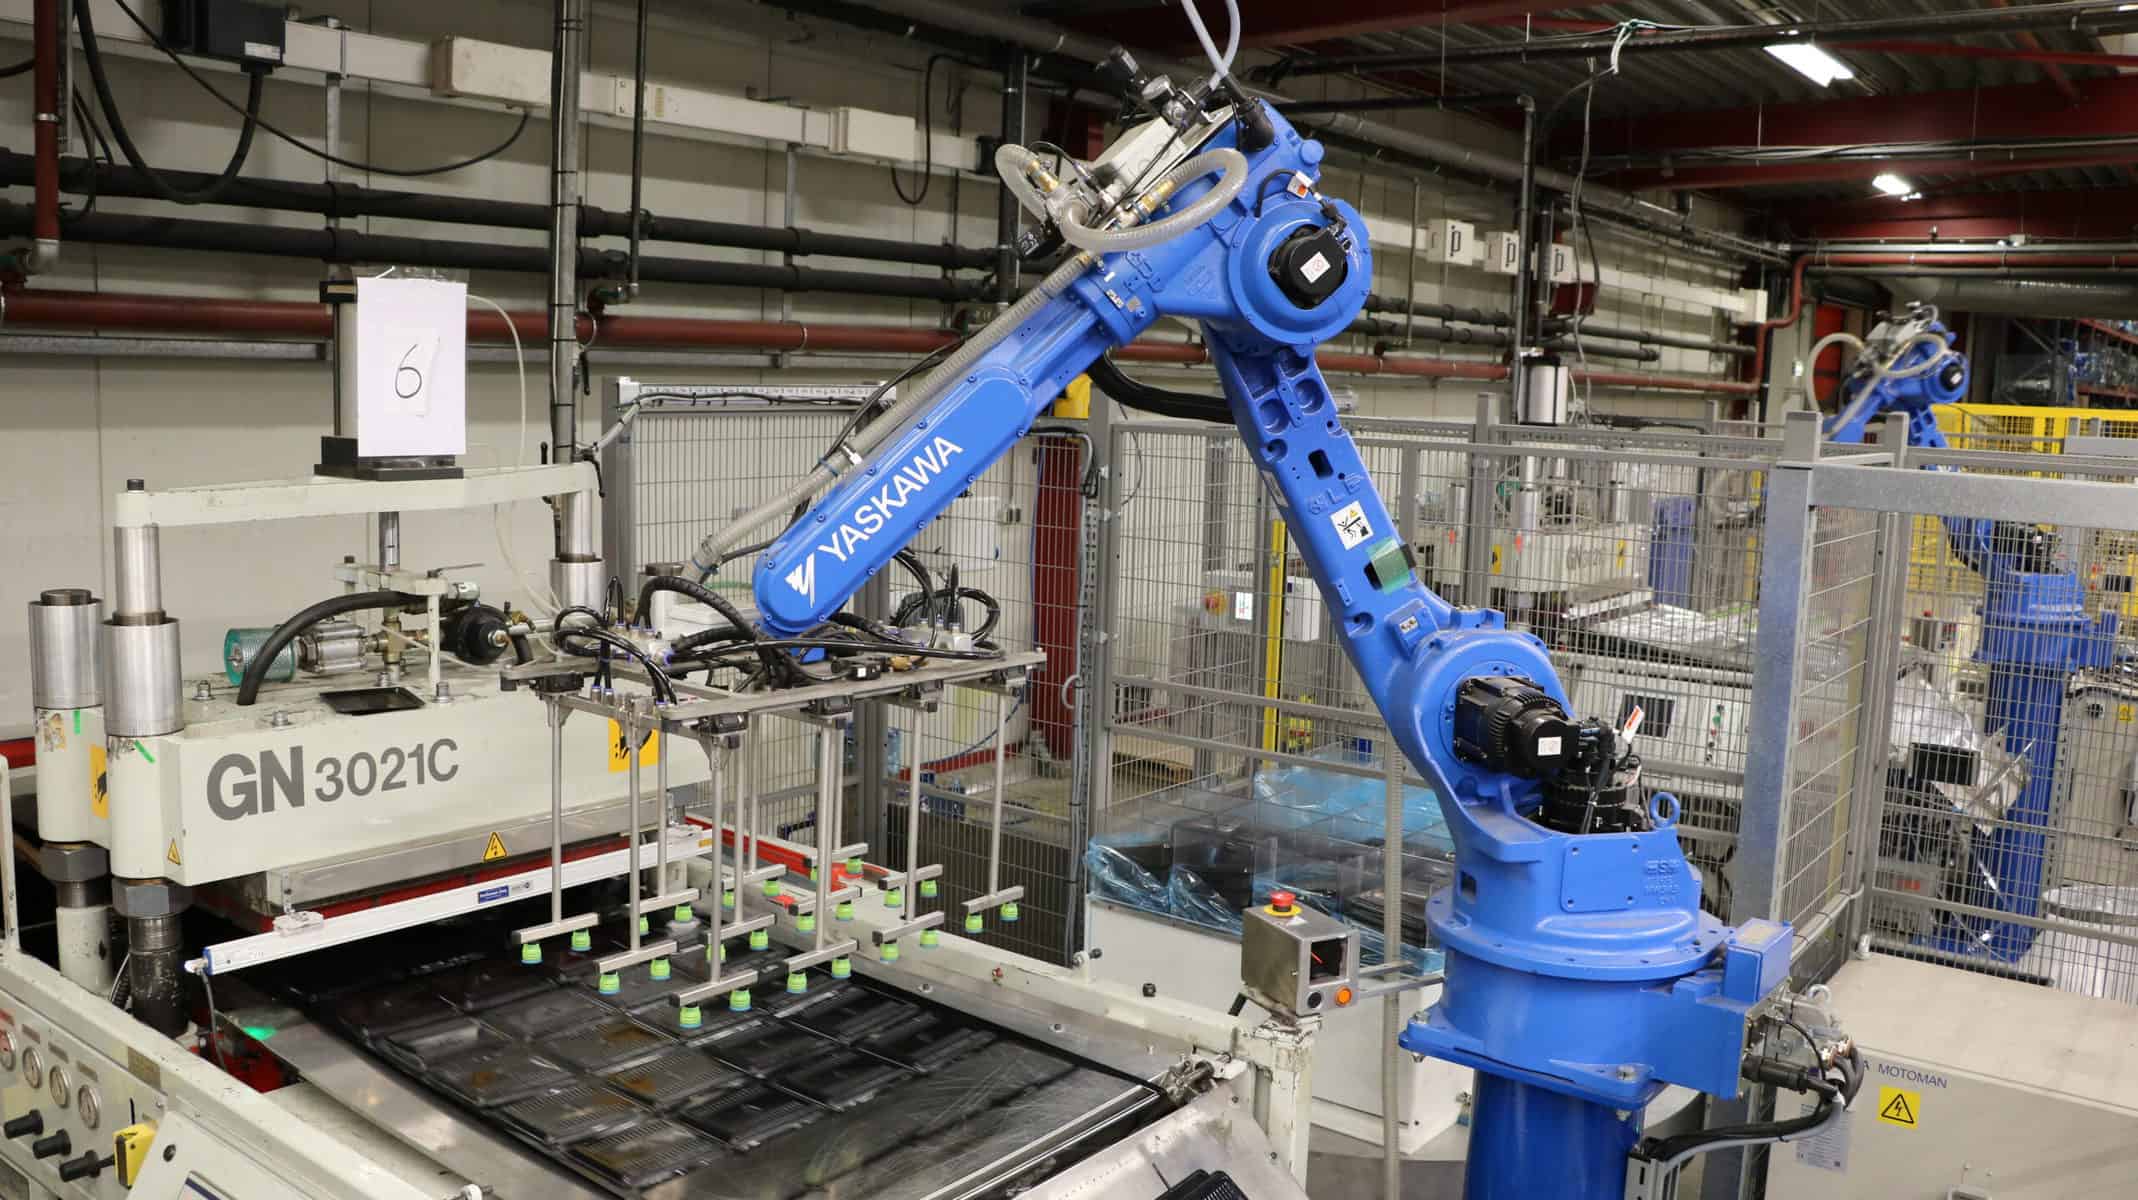 PS Robot automatisering machine pick en place